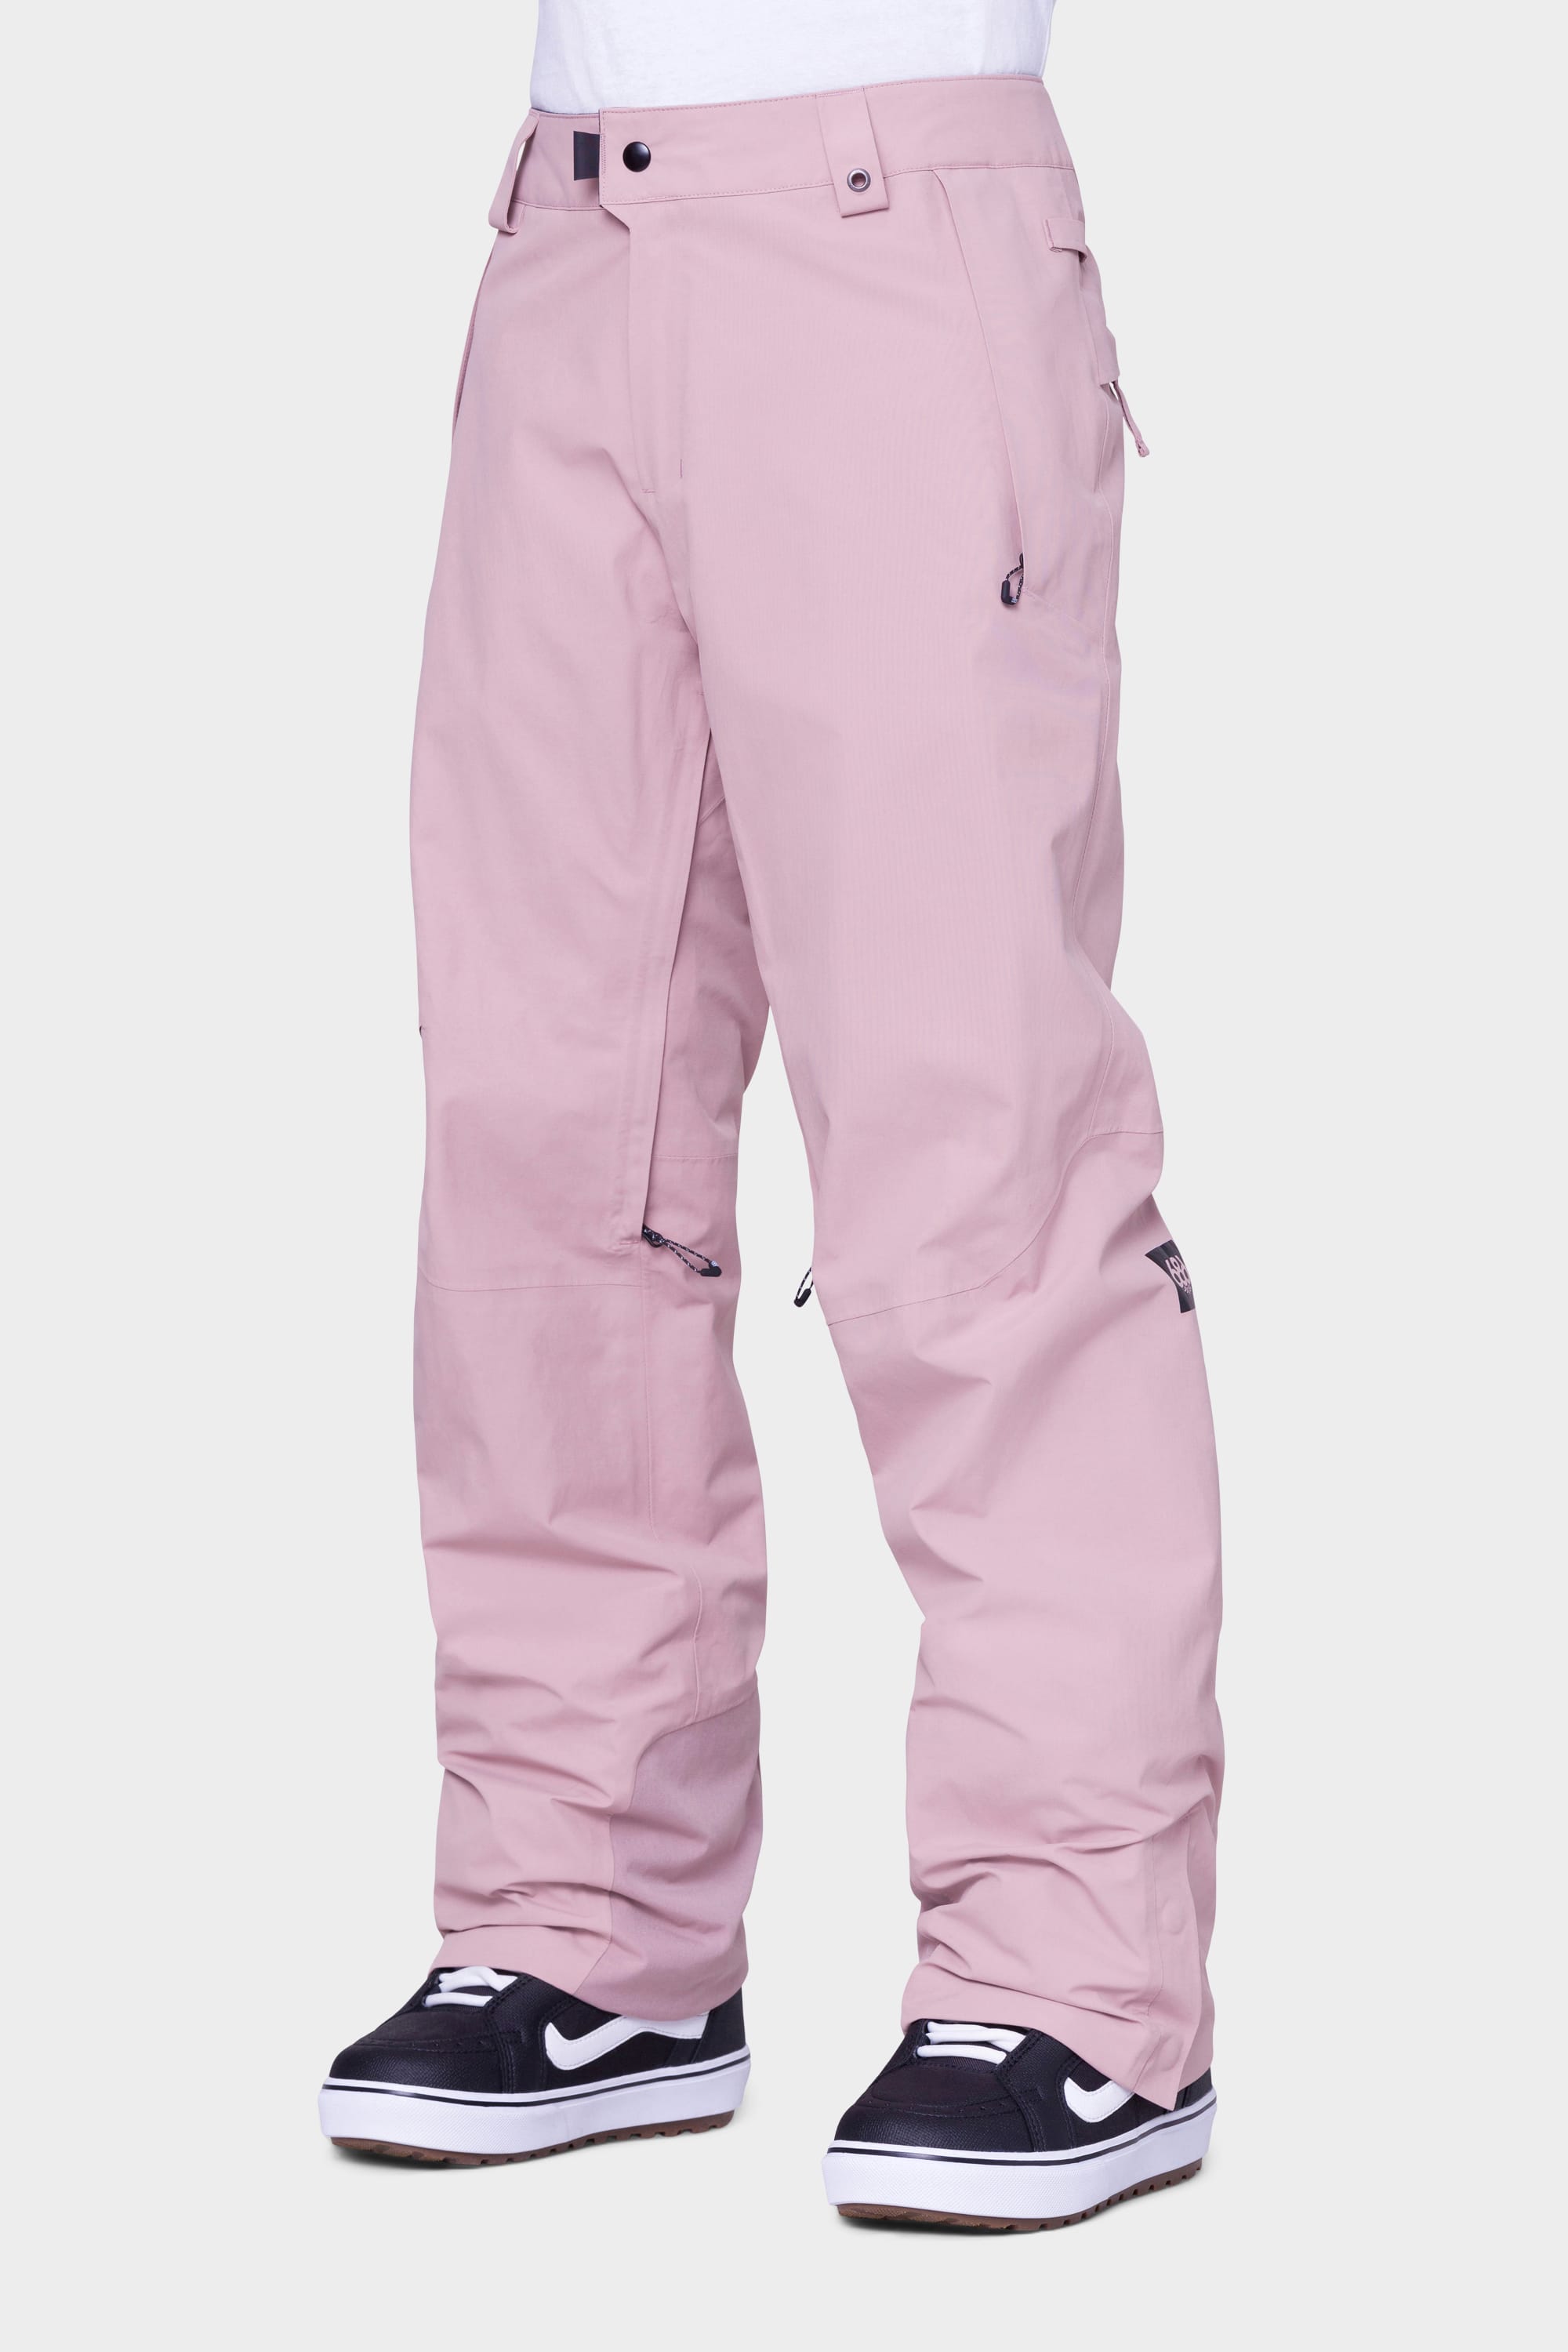  Womens Winter Snow Pants, Waterproof Insulated Ski Pants,  Ripstop Snowboard Bottoms, Cargo Snow Pants Plum, Small